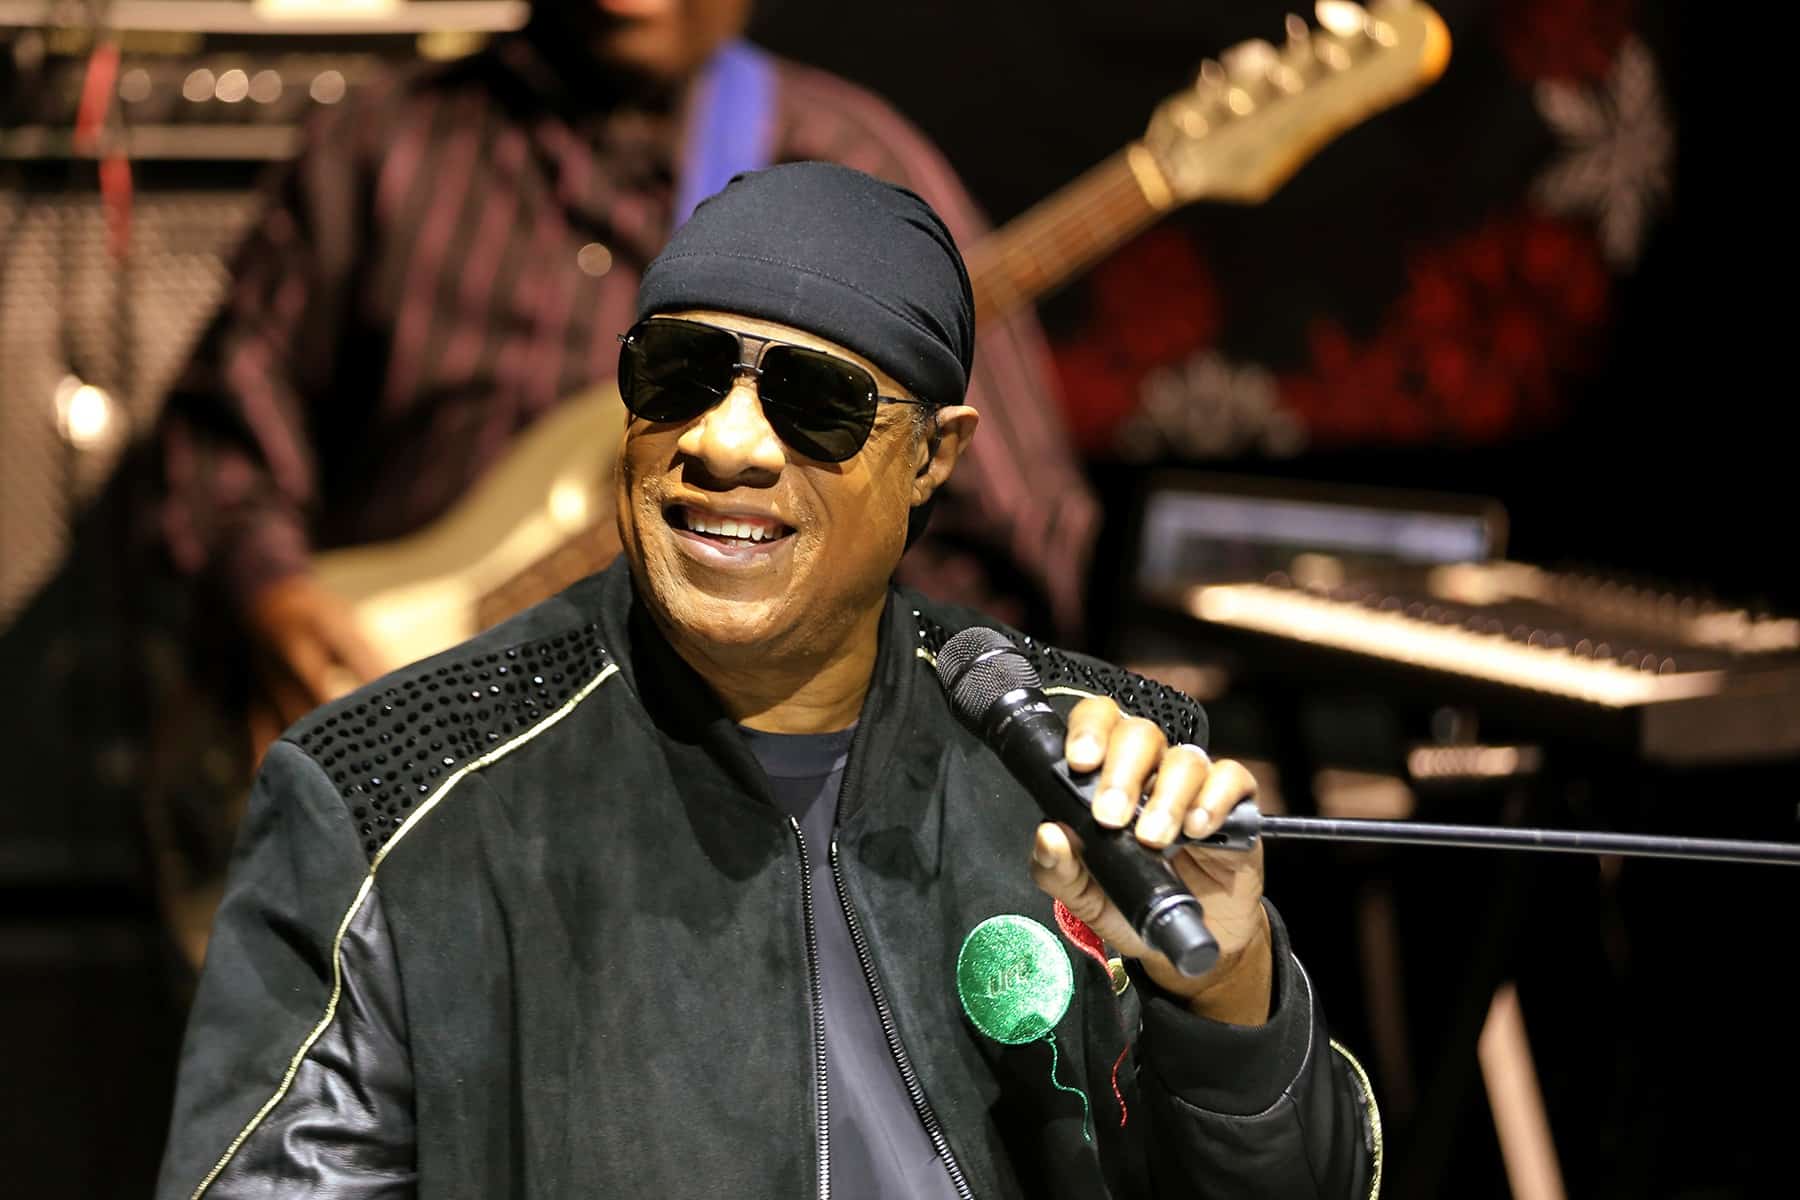 top 1 hit from Stevie Wonder I think ( Superstition – Stevie